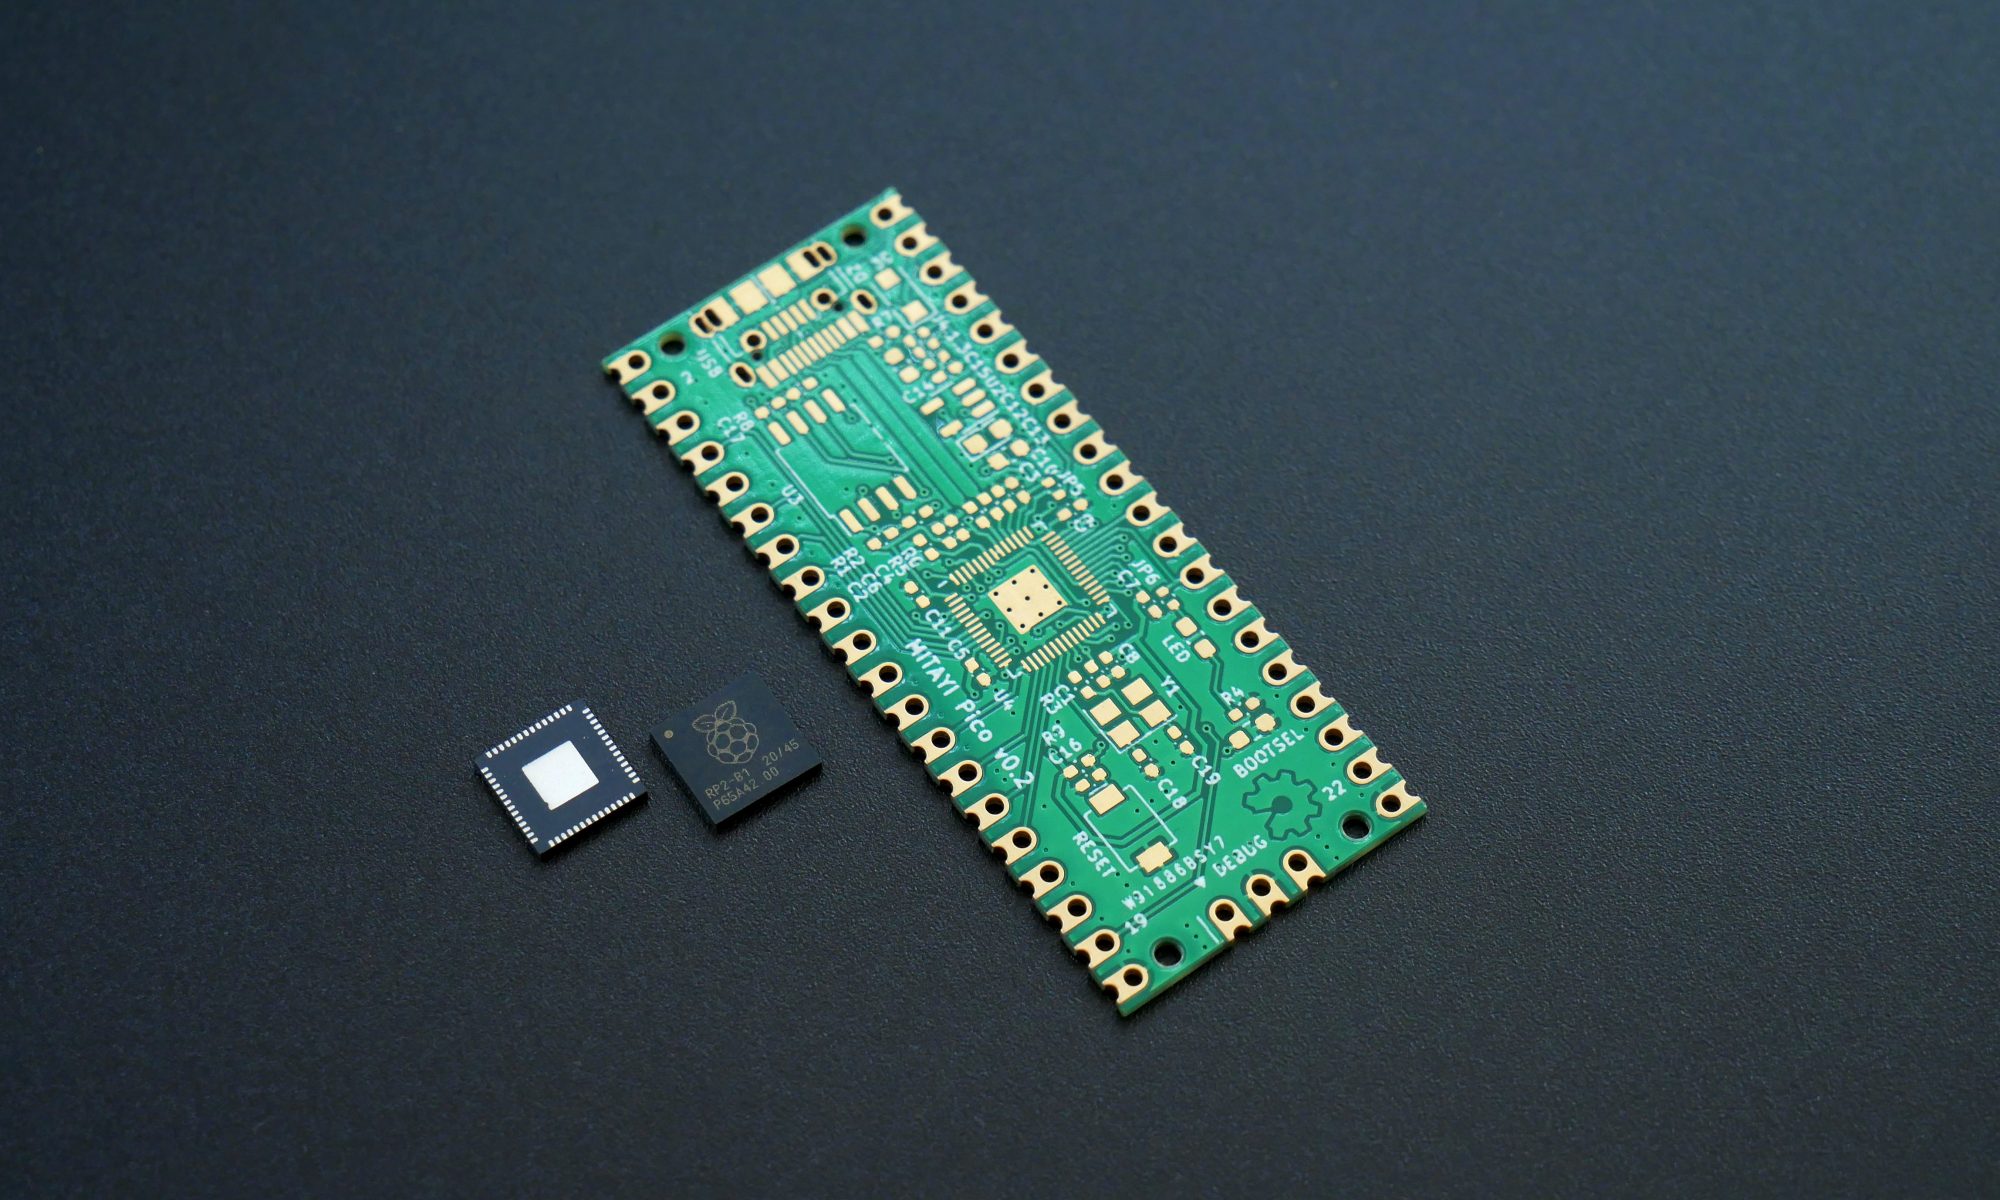 A plain Mitayi Pico RP2040 PCB near to two RP2040 microcontrollers.